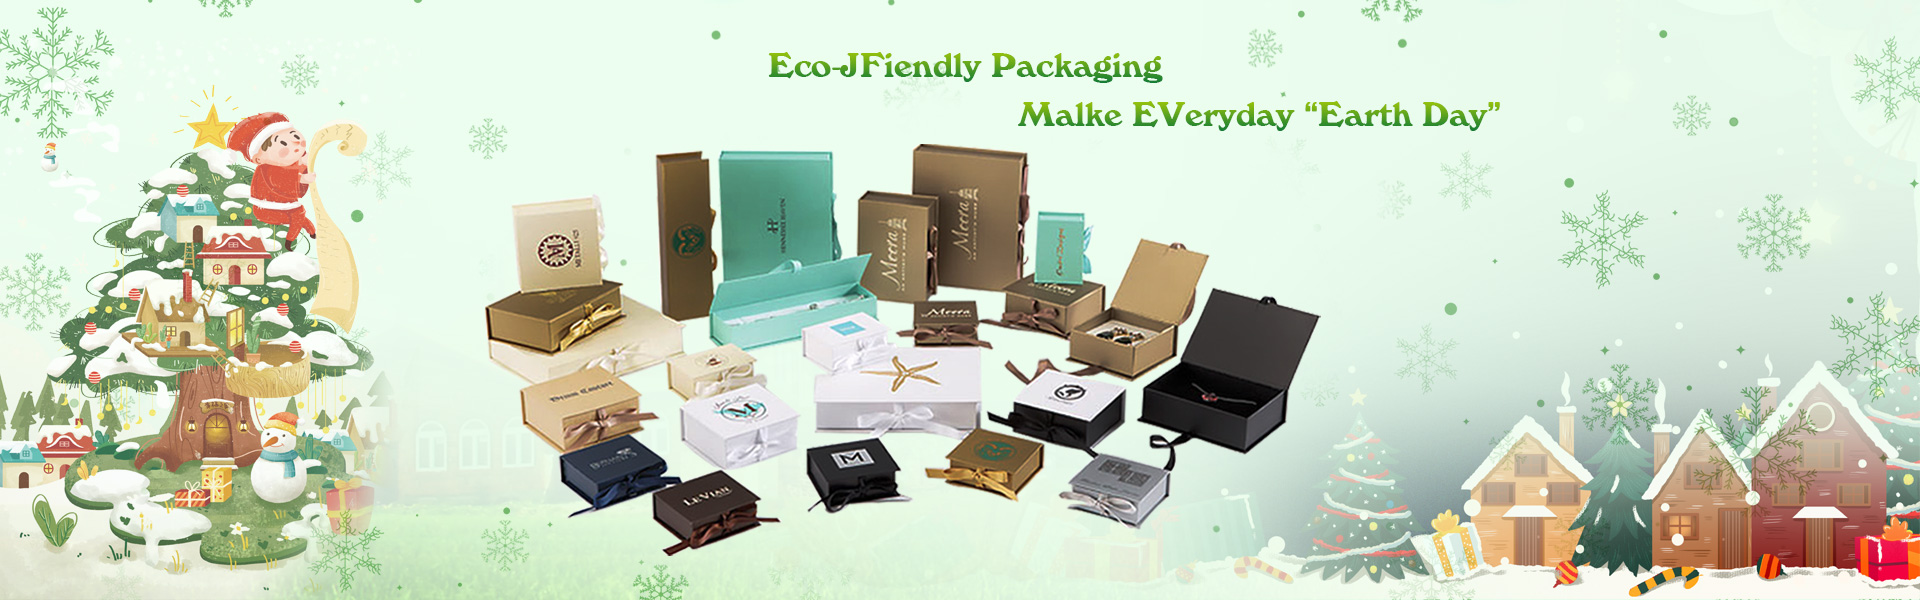 Caja de regalo, caja de embalaje, etiqueta,Dongguan chengyuan packaging products Co,.Ltd